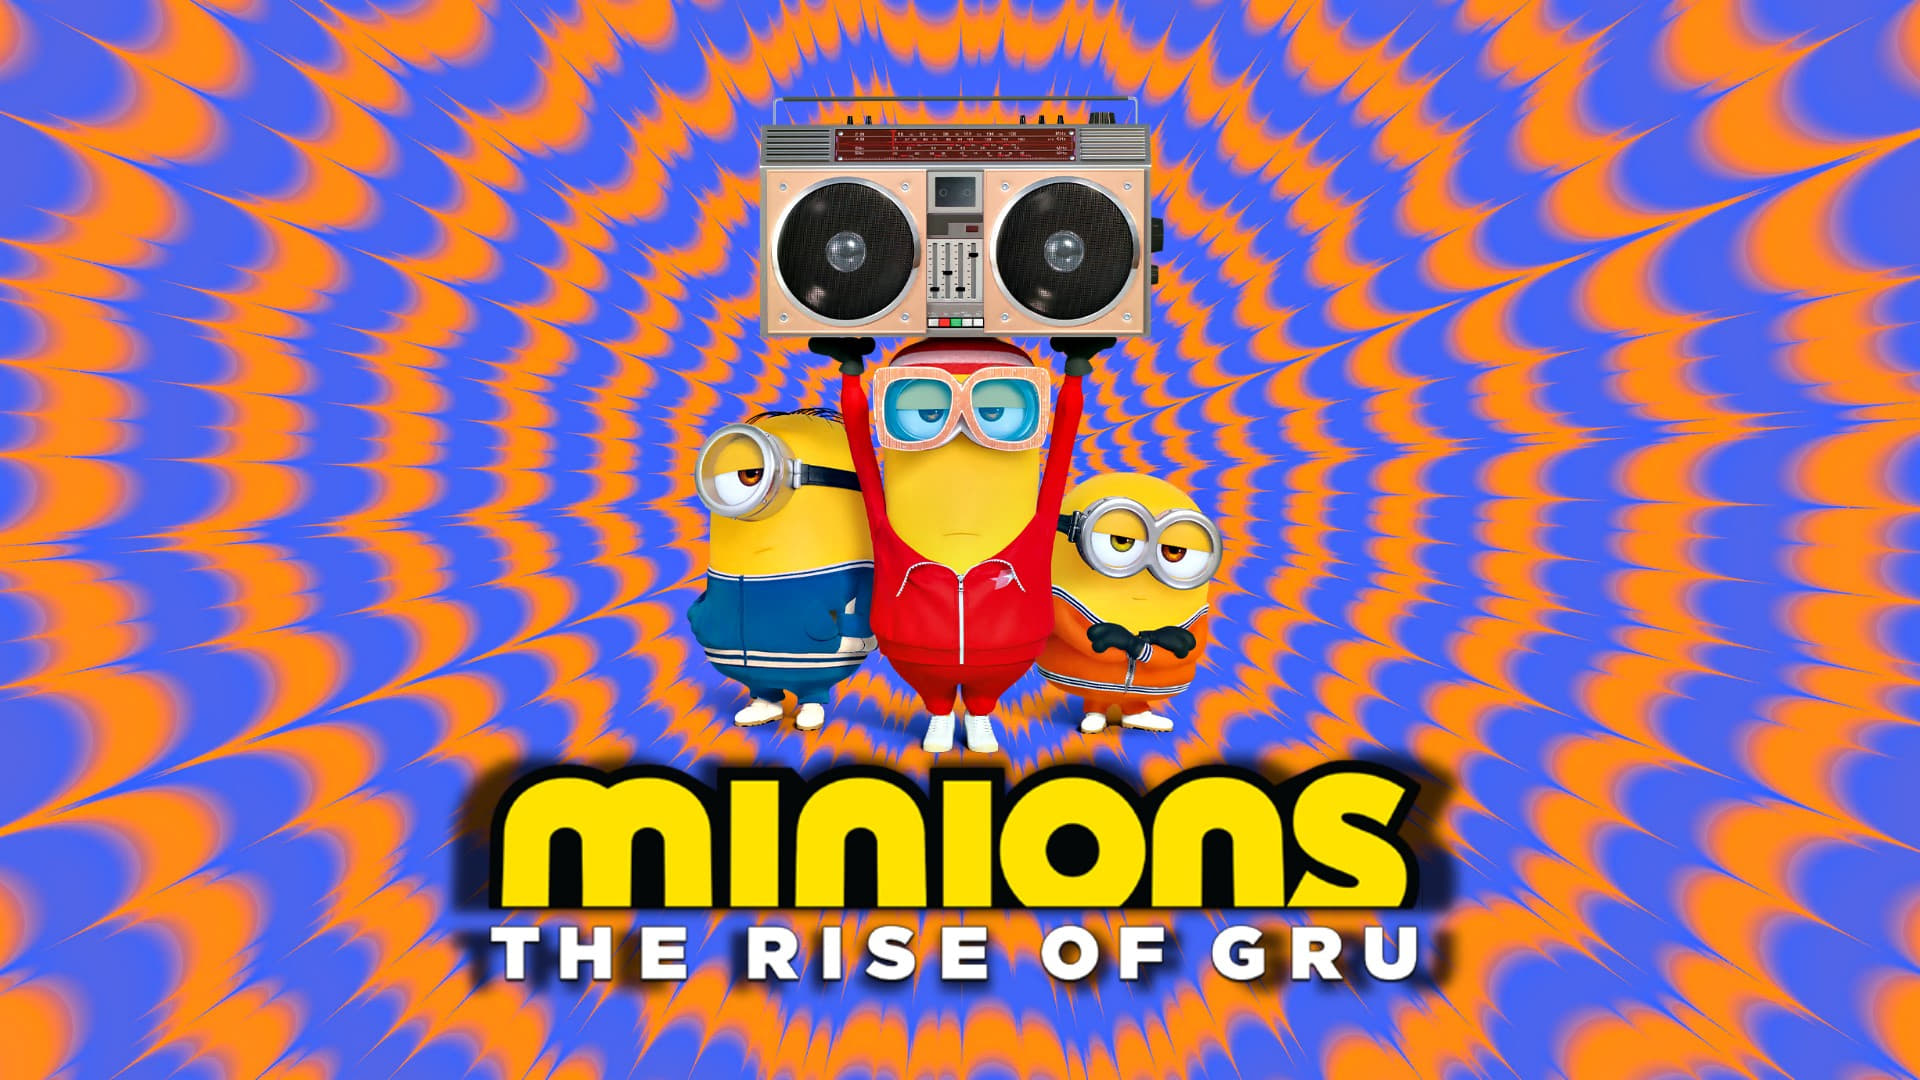 Minions: The Rise of Gru